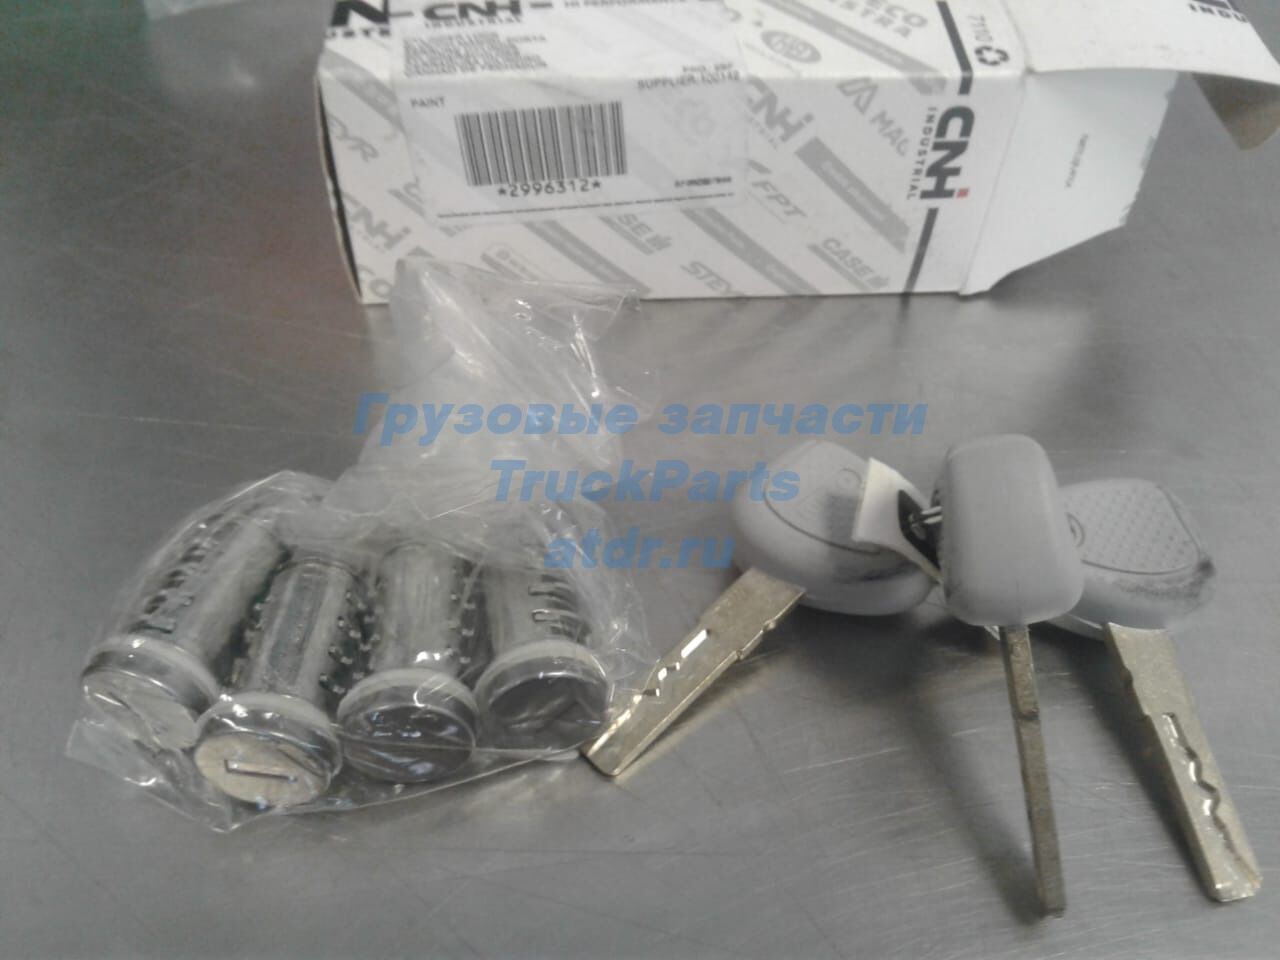 Ключи Iveko Stralis комплект с личинками на двери и зажигание 2996312 IVECO 2996312